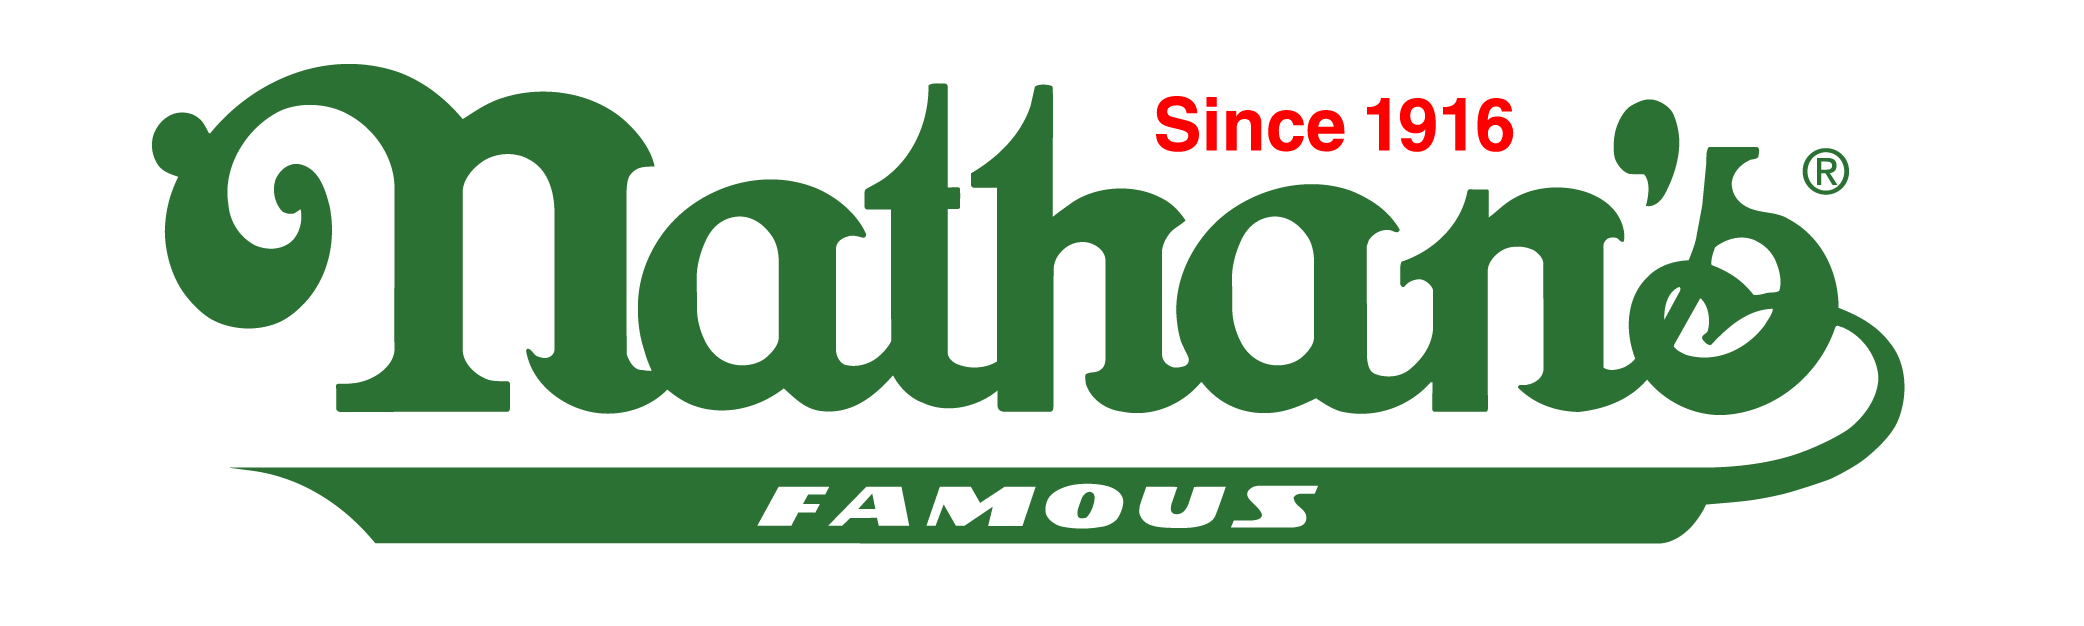 Nathan's Famous Express logo